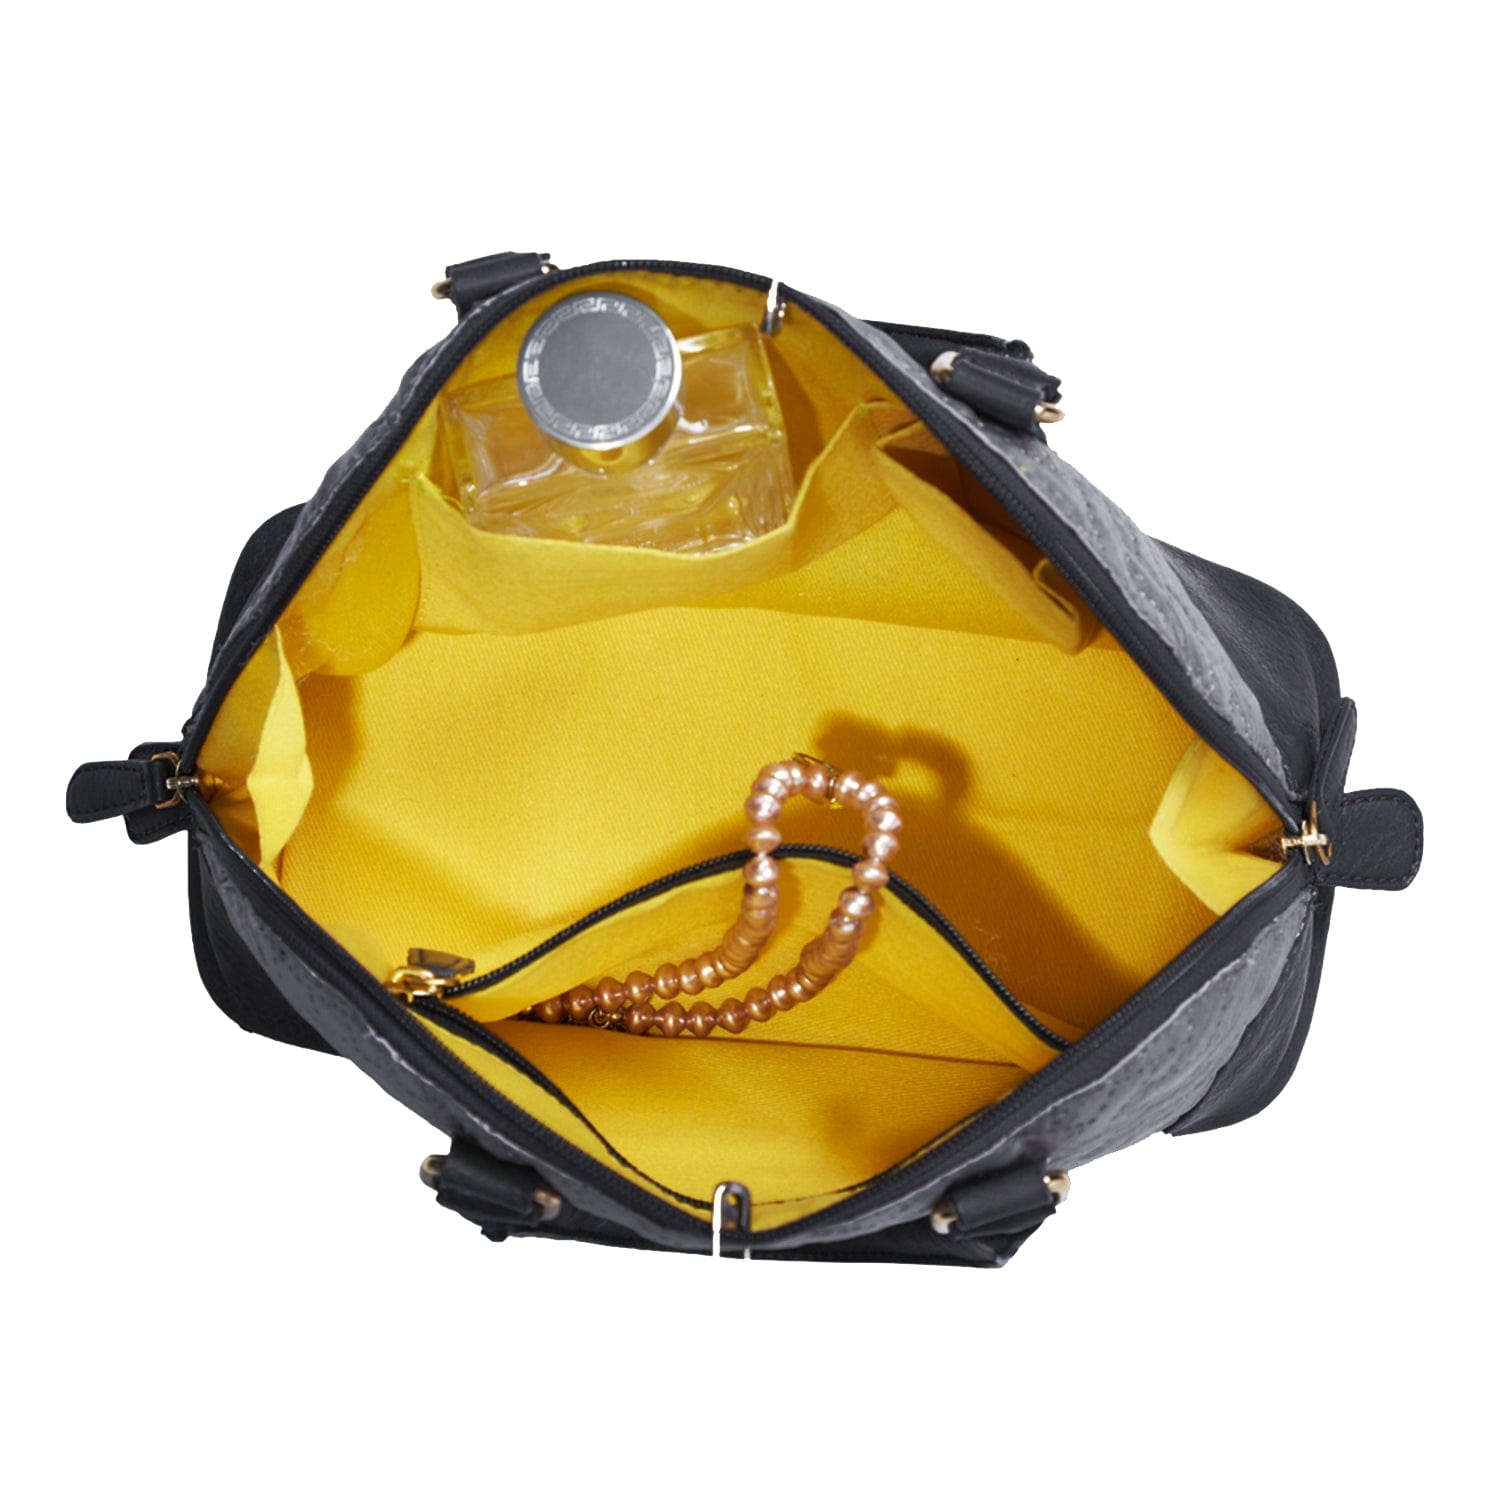 Mona-B Bag Mona B Small Handbag, Shoulder Bags For Shopping Travel With Stylish Design For Women: BLK - QRP-301 BLK